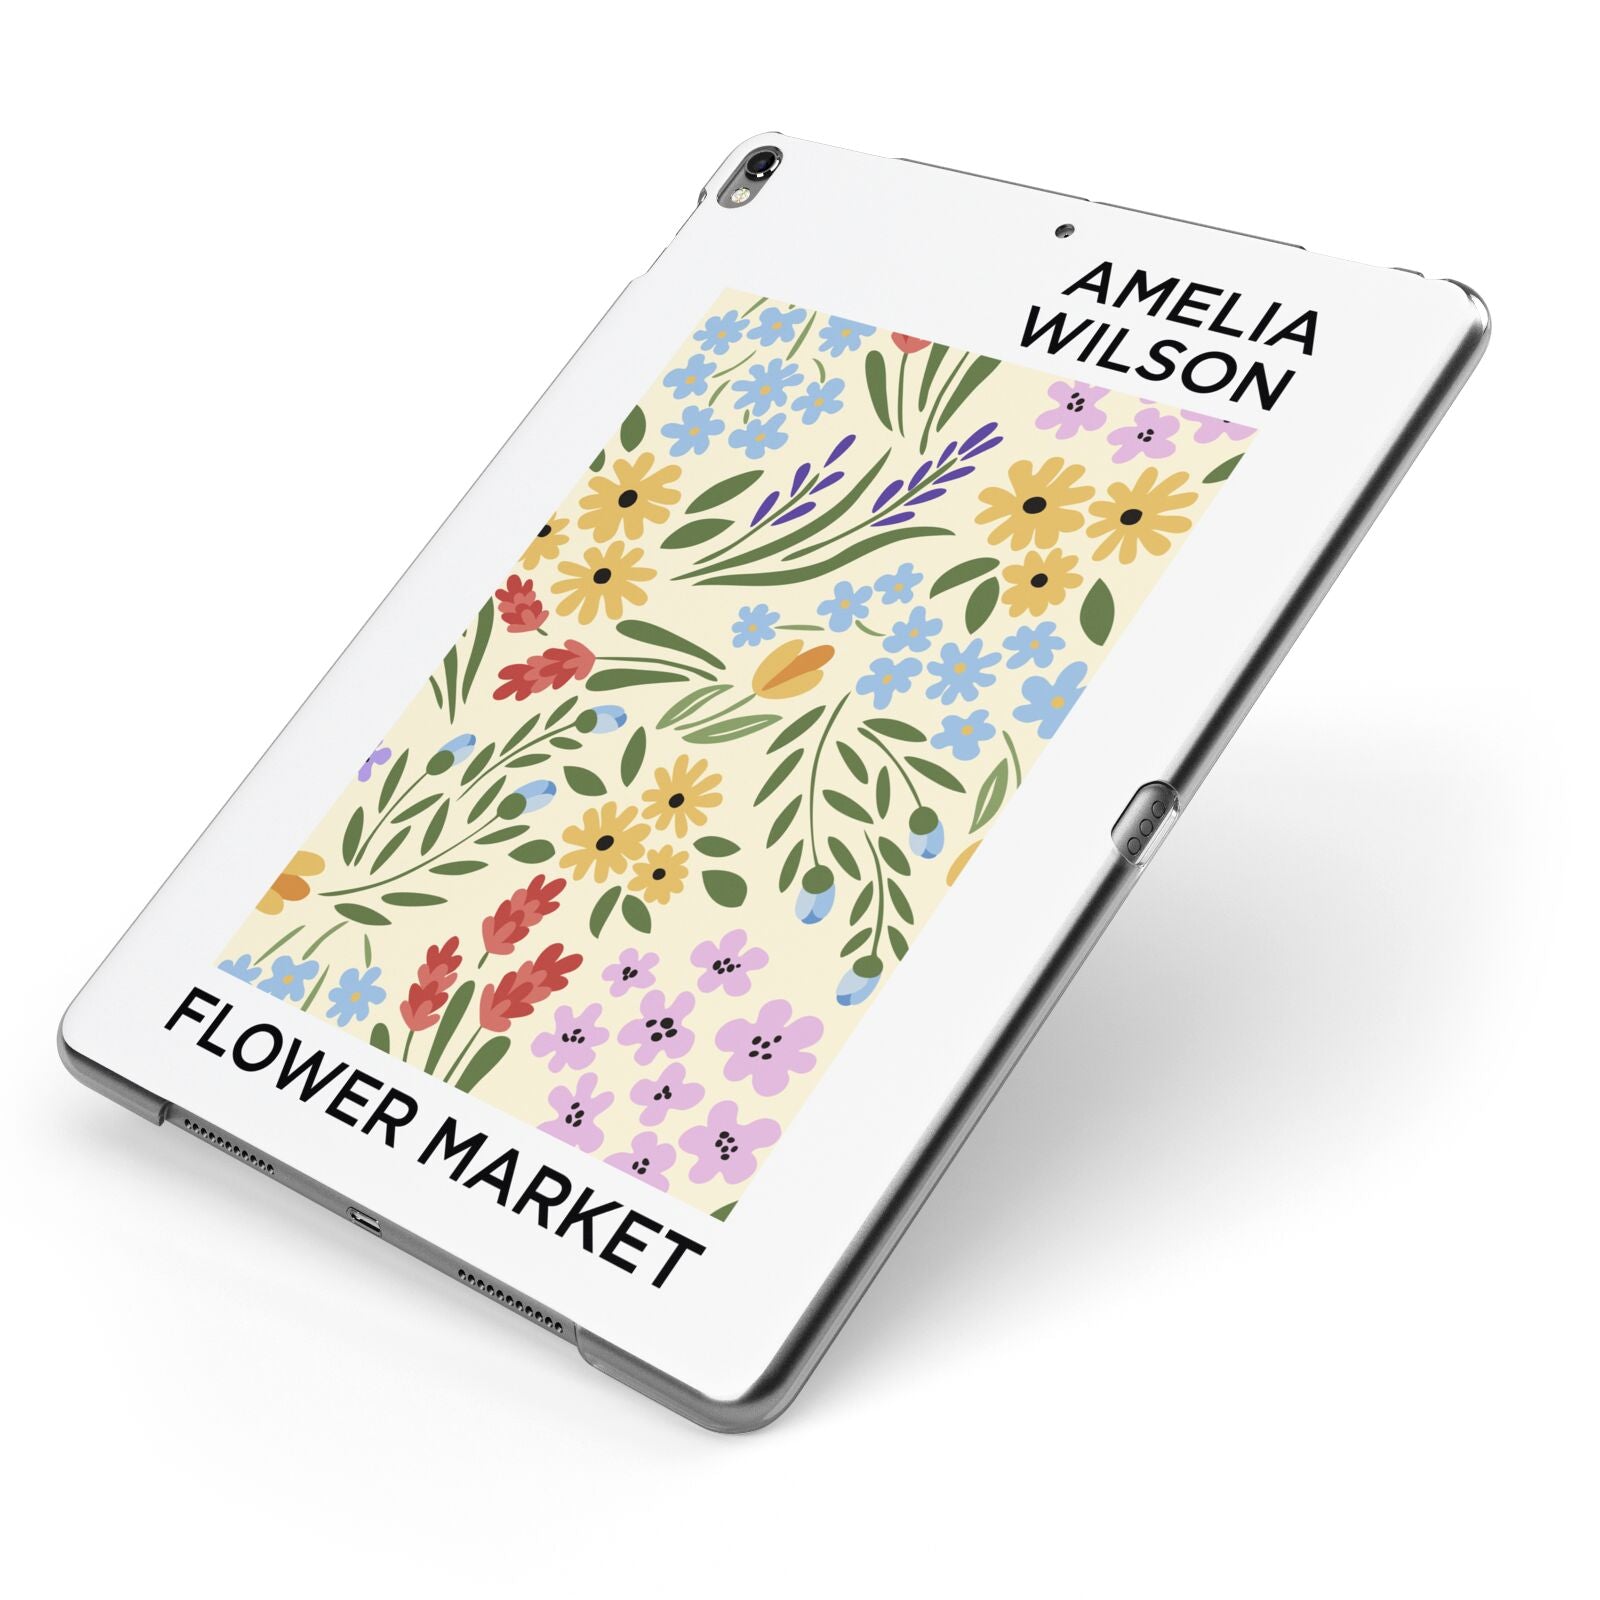 Paris Flower Market Apple iPad Case on Grey iPad Side View